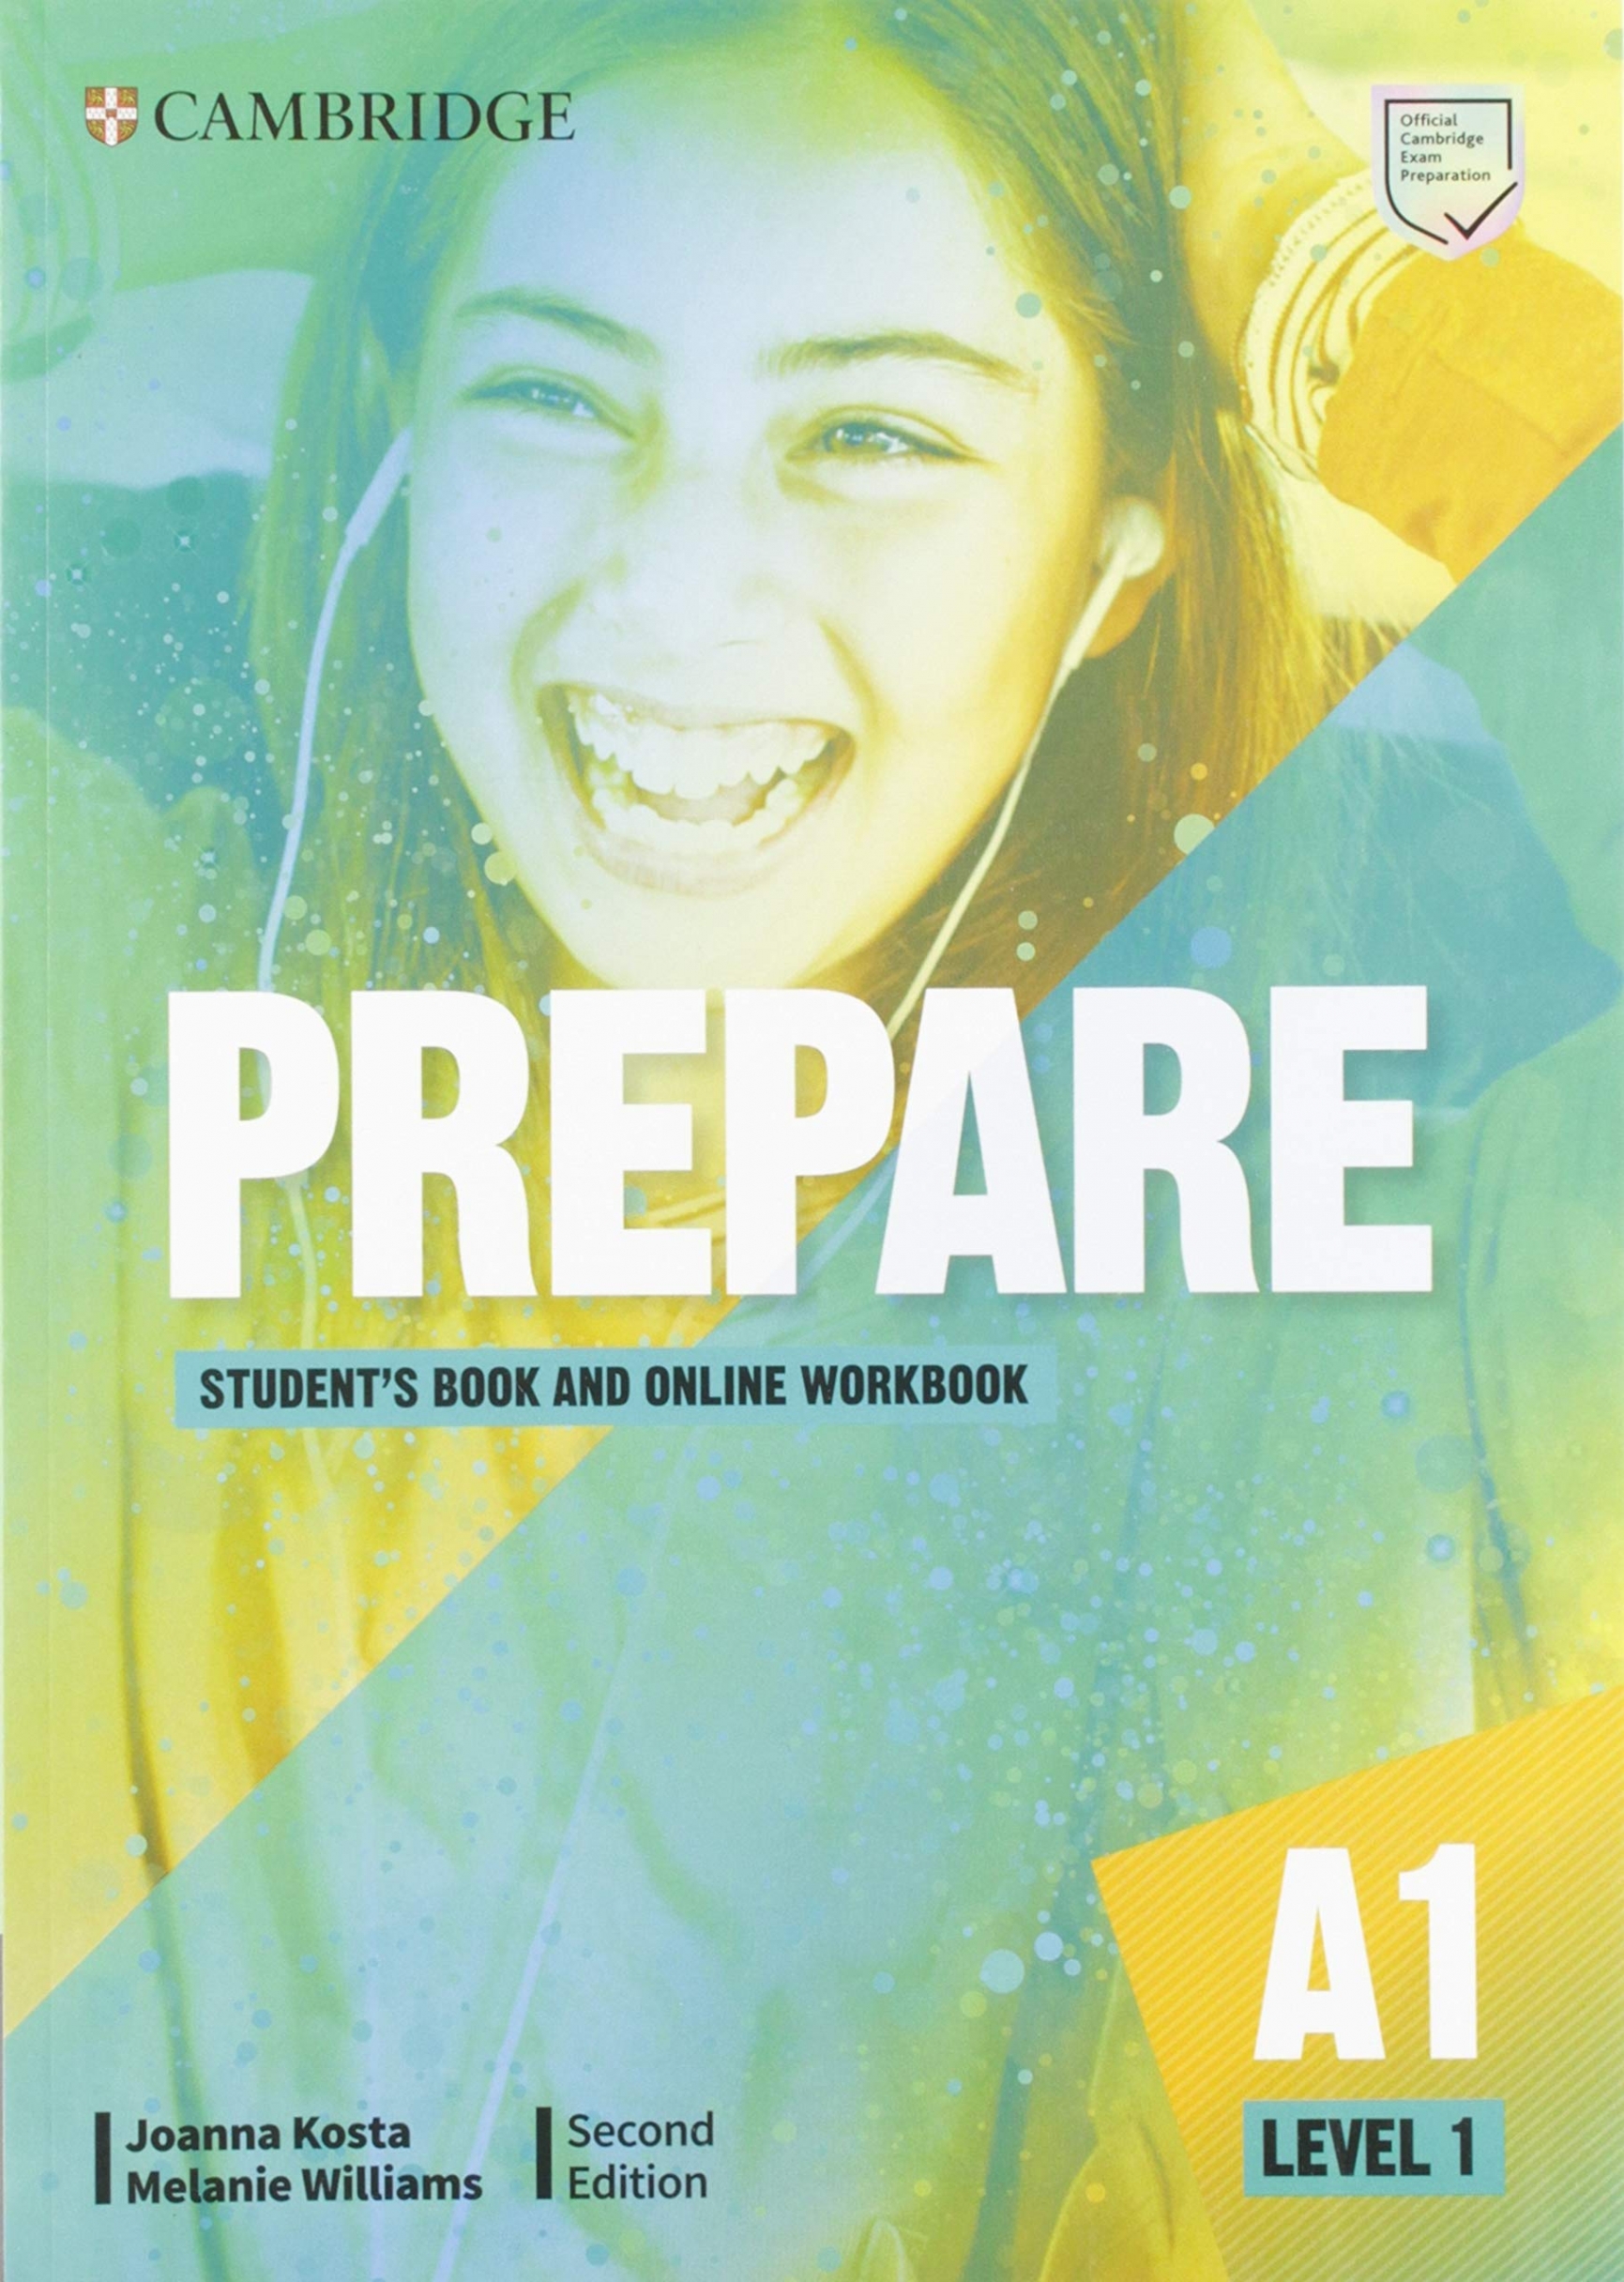 Williams Melanie, Kosta Joanna Prepare A1 Level 1 Student's Book and Online Workbook Level 1. Second Edition 